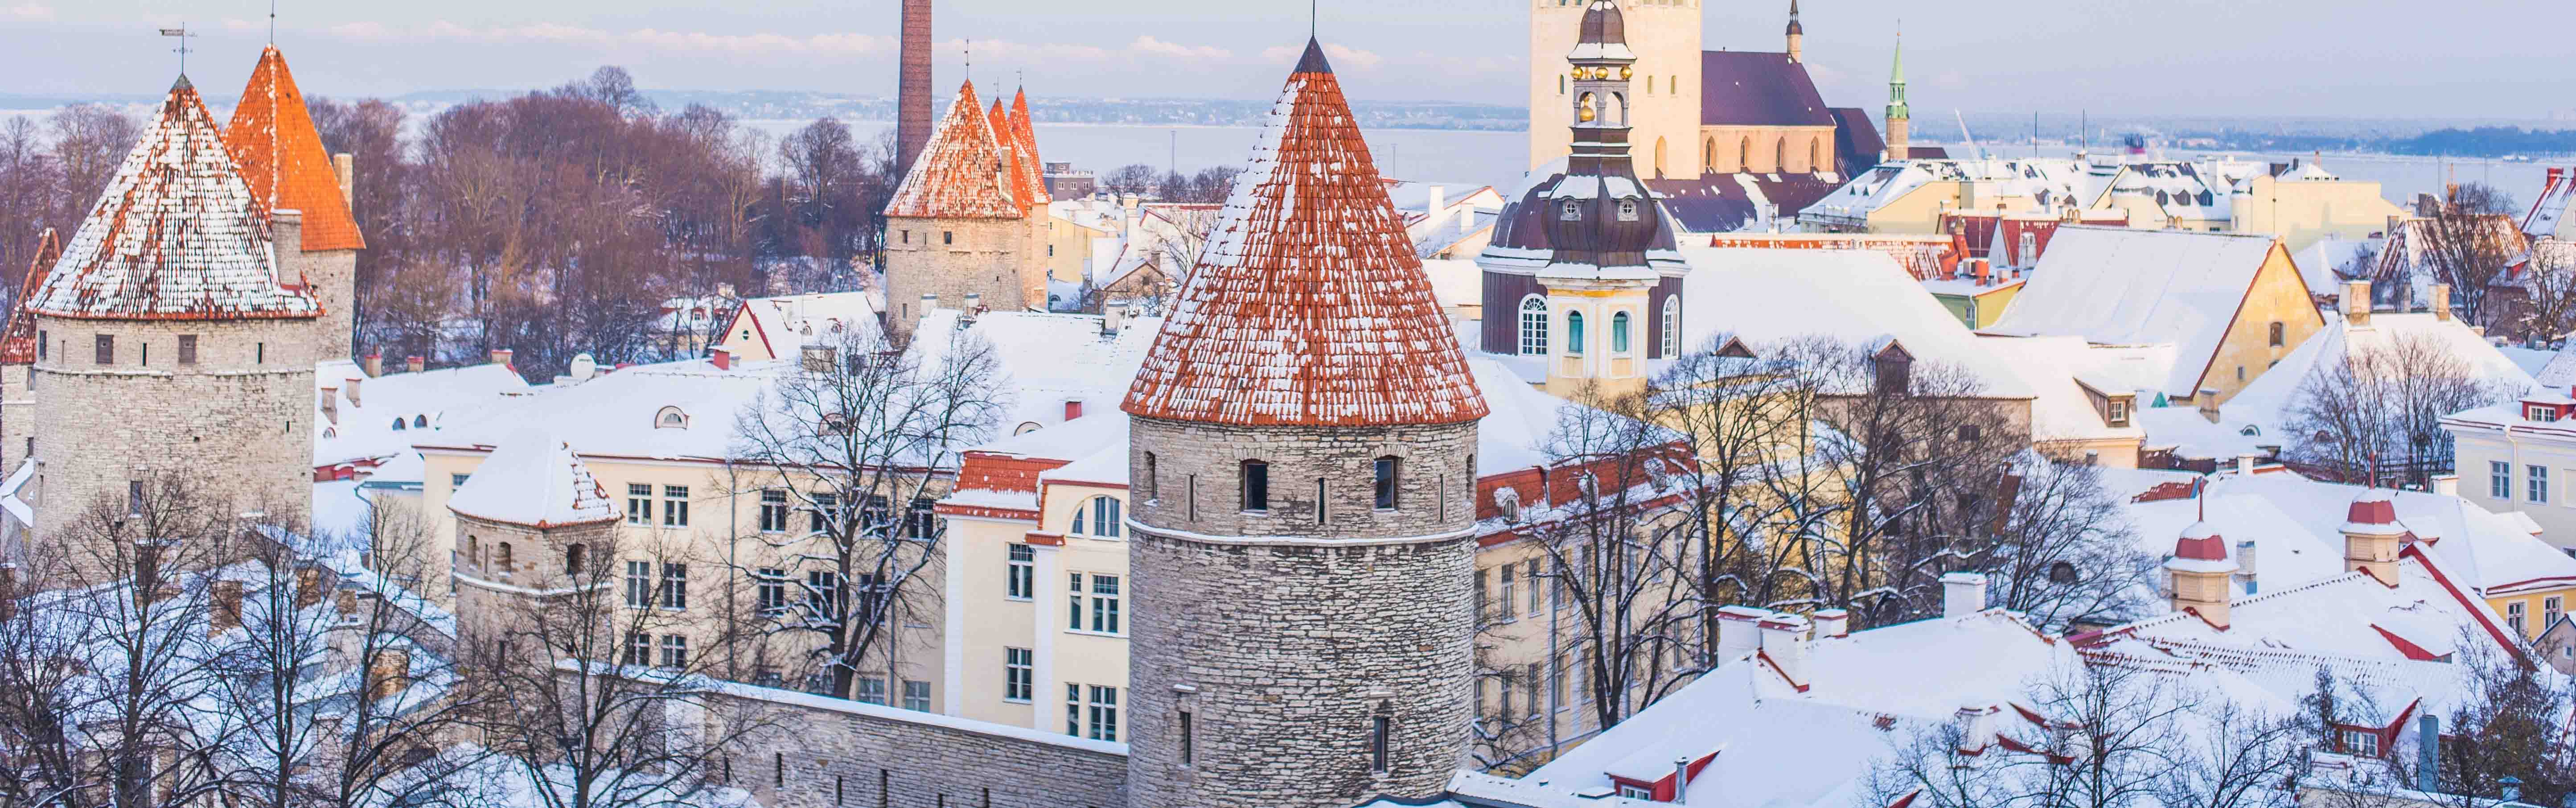 Snowy castle under cloudy skies in Old Town, Tallinn, Estonia